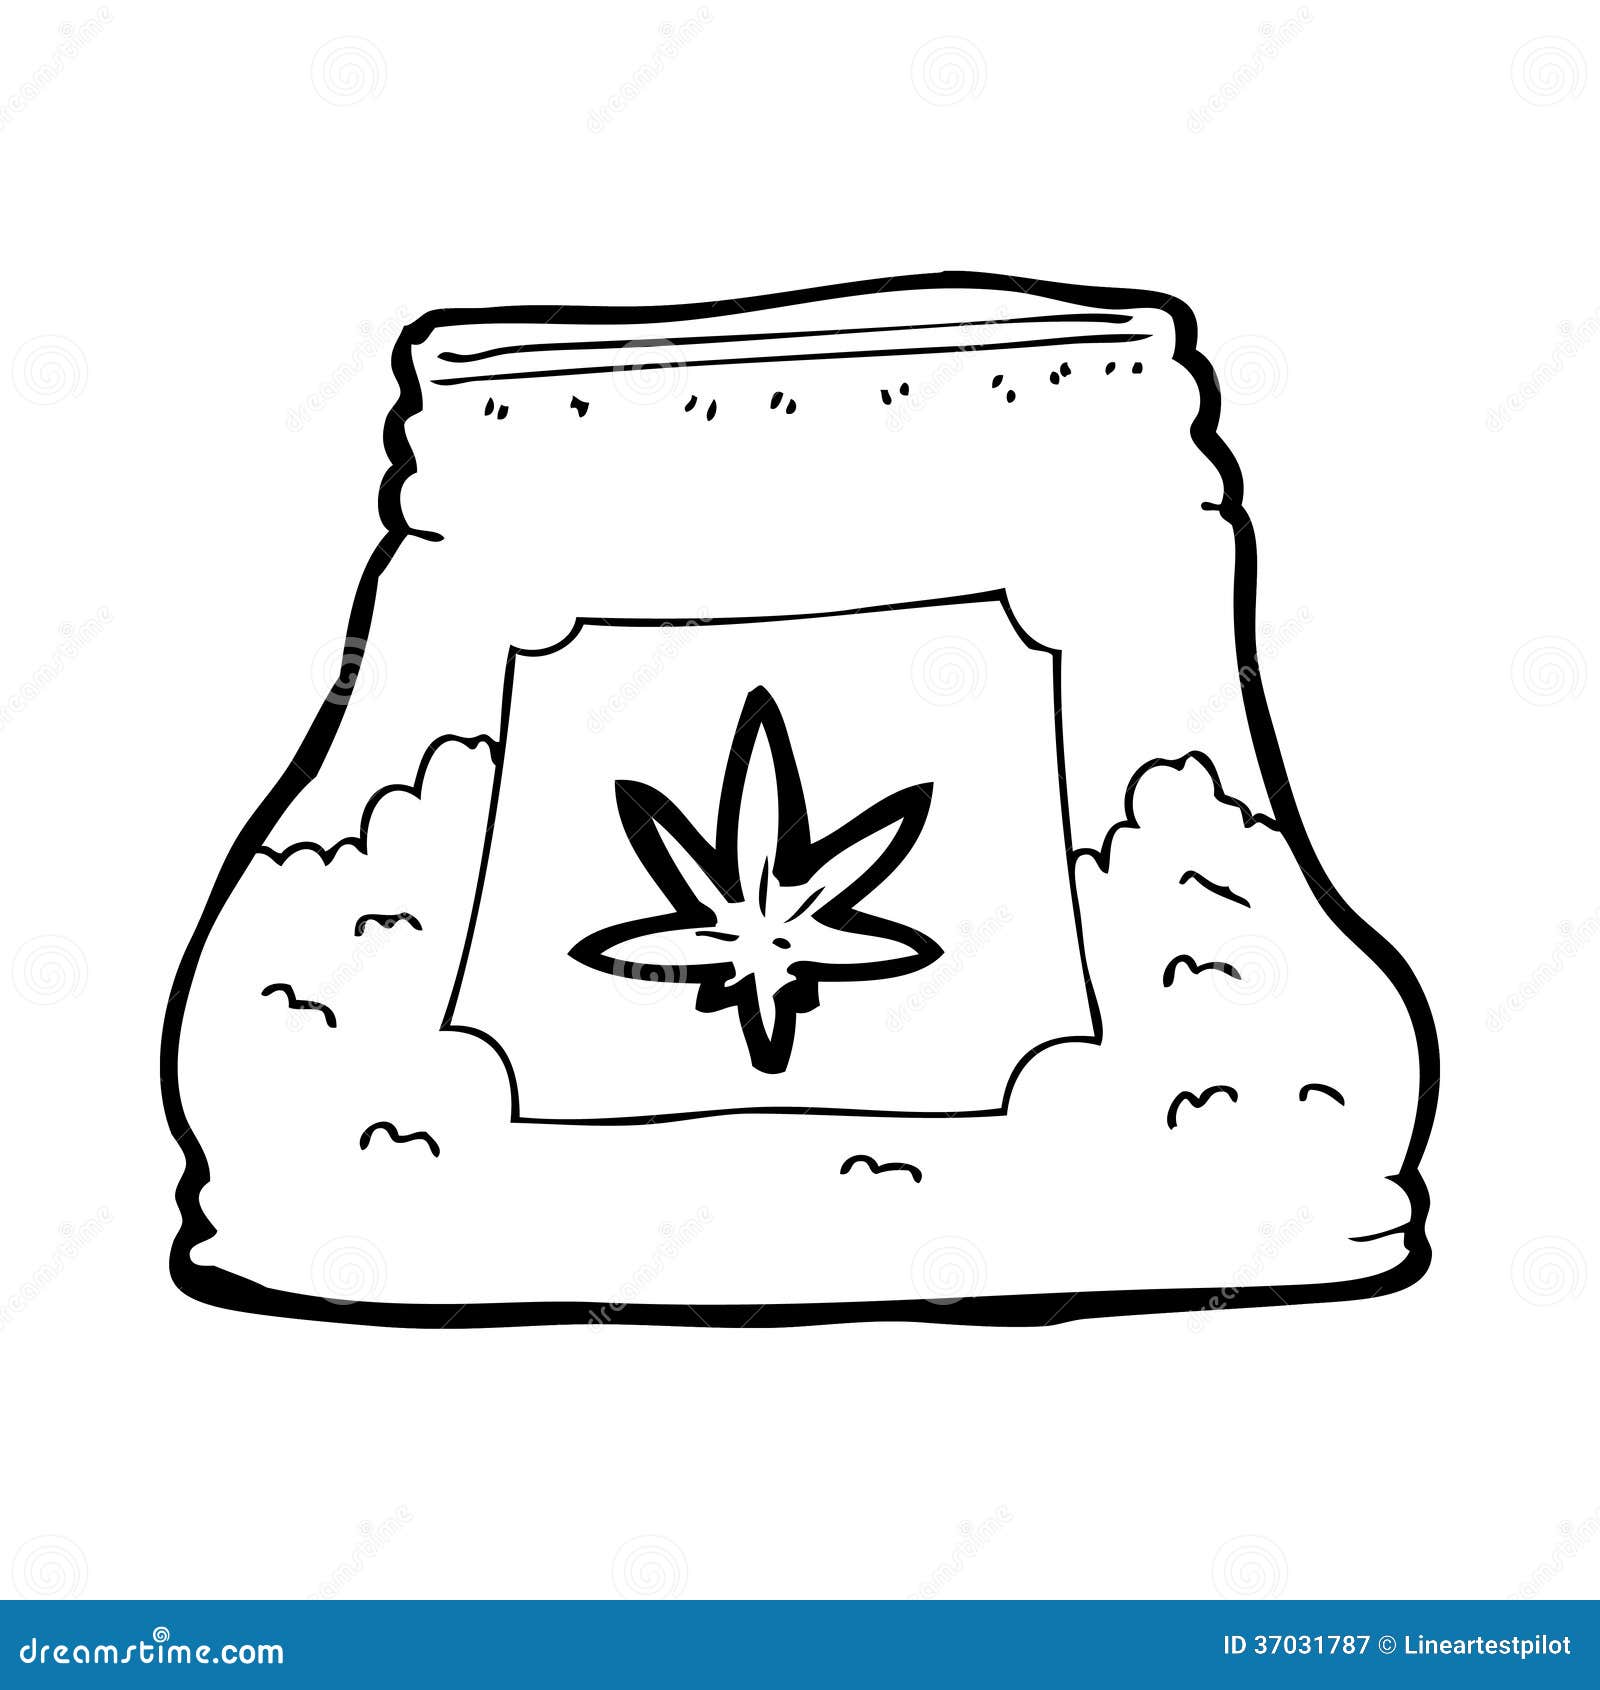 Cartoon bag of weed stock illustration. Illustration of funny - 37031787